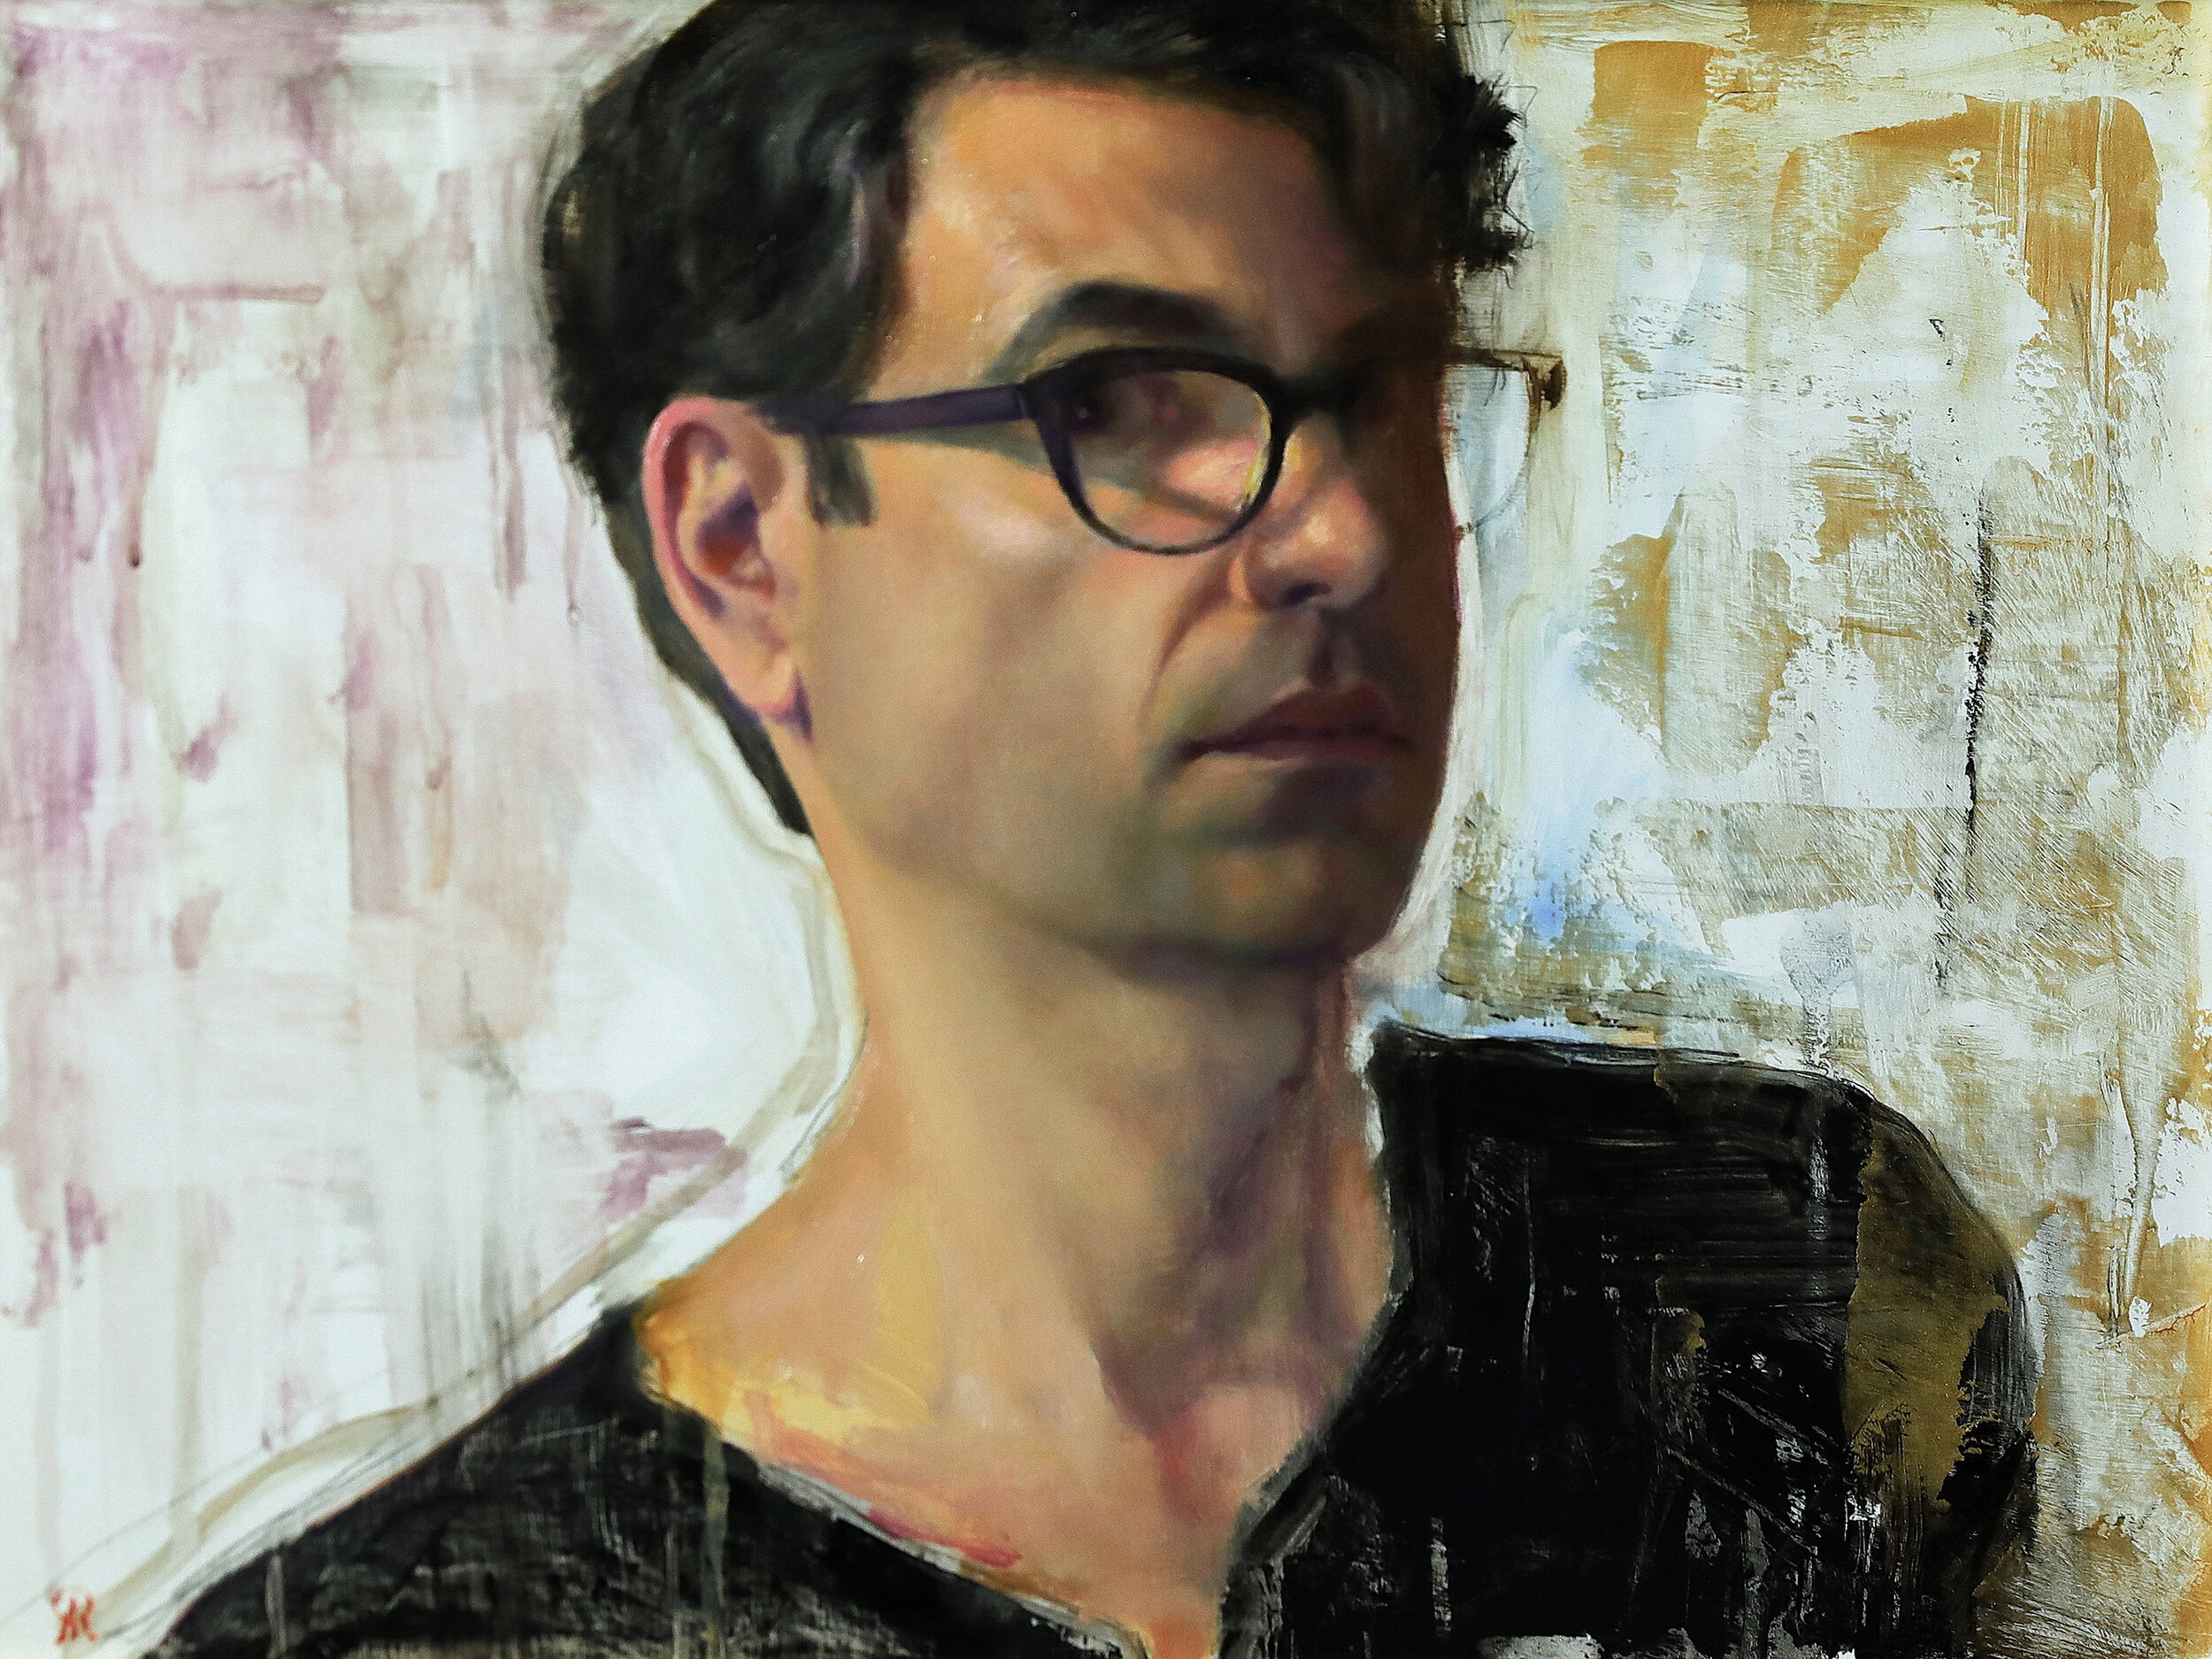 Self portrait of Salmagundi artist member, Luis Roure Alvarez